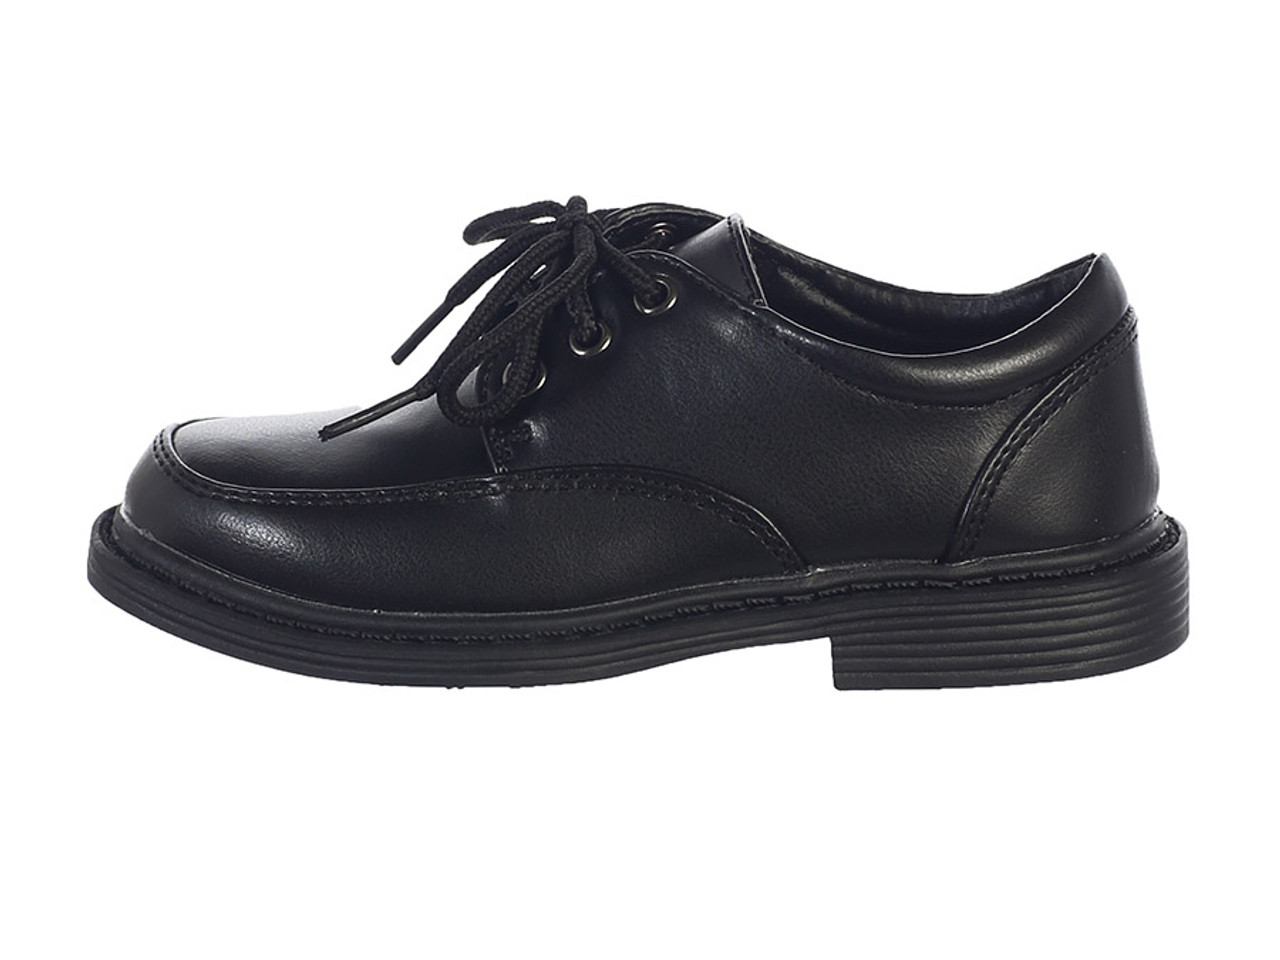 https://cdn11.bigcommerce.com/s-ccemqvqt2n/images/stencil/1280x1280/products/31754/59663/boys-black-lace-up-matt-dress-shoes-34__37397.1626291812.jpg?c=1